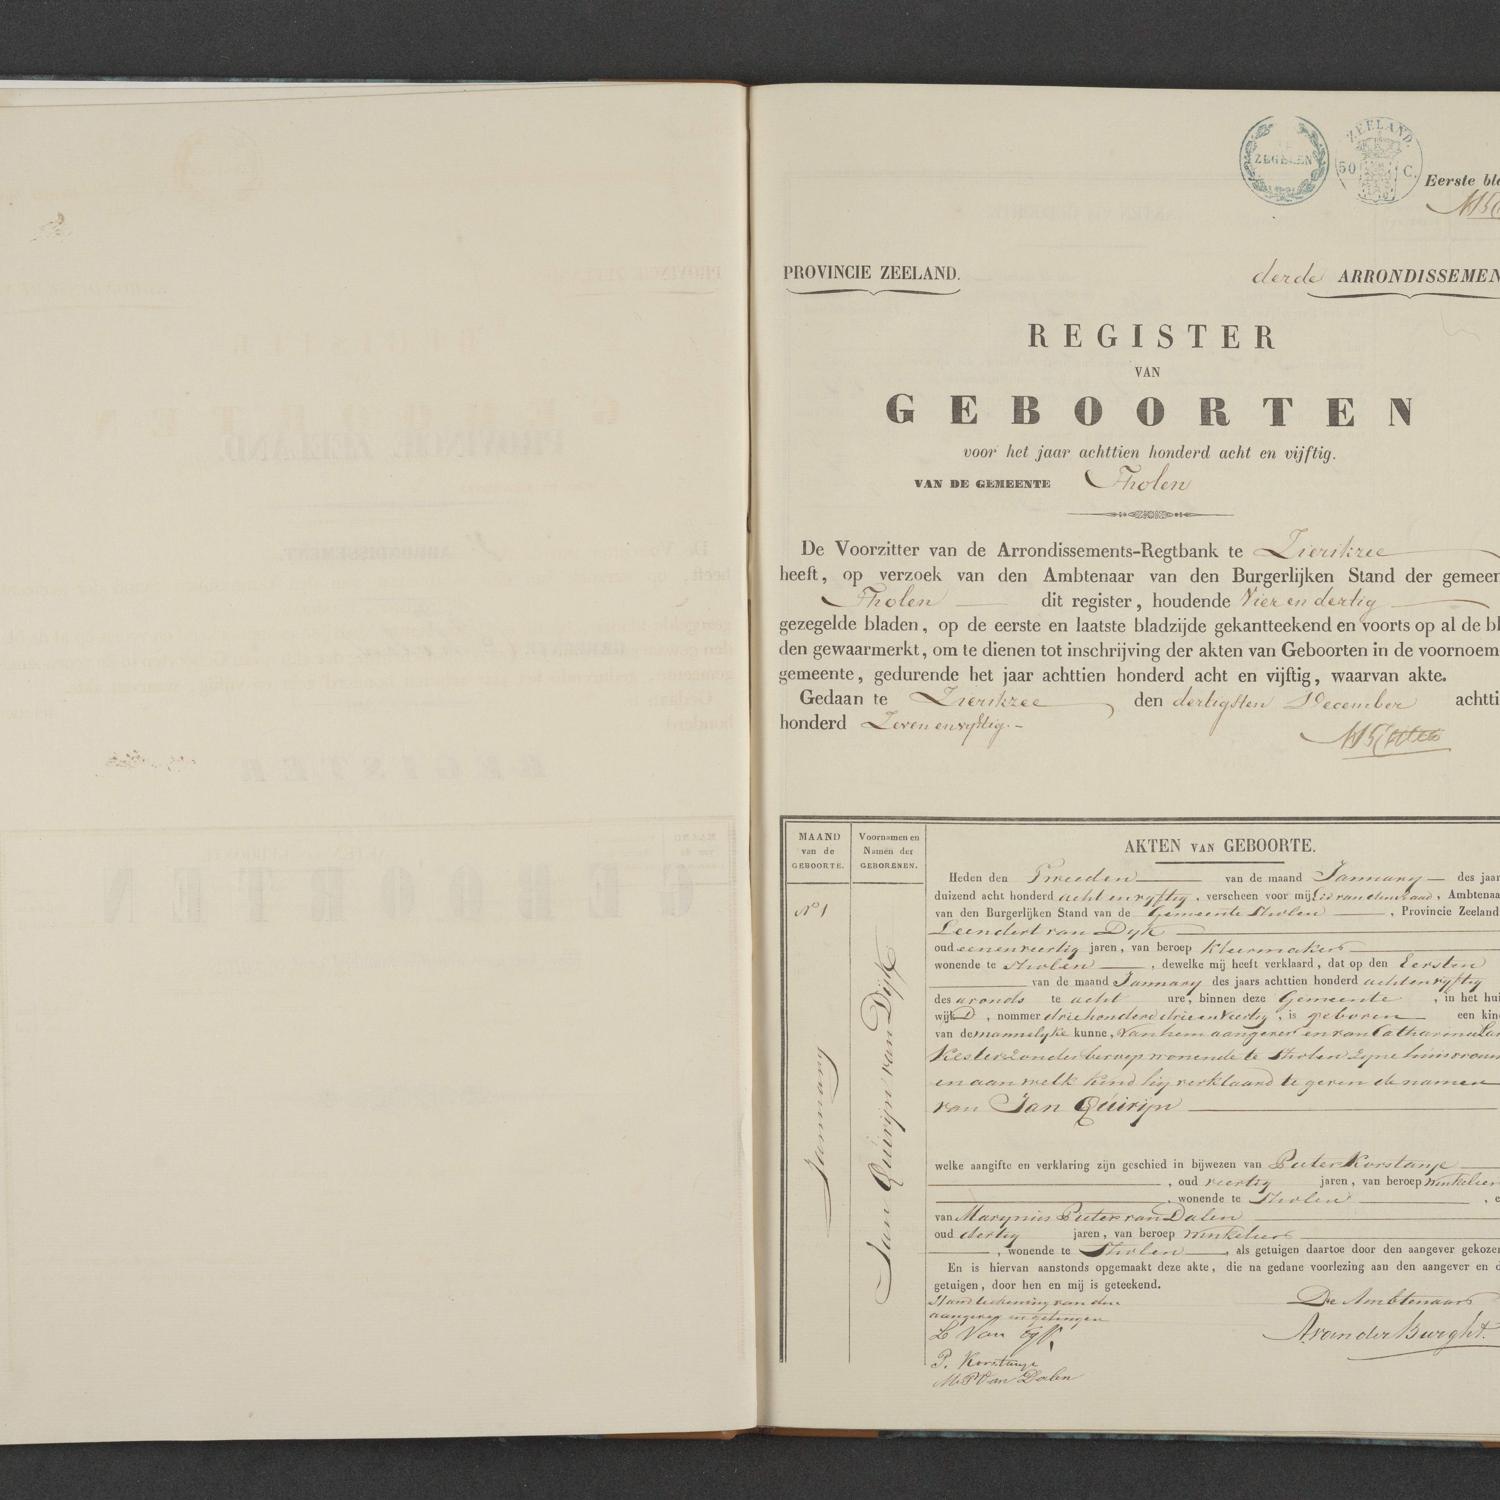 Civil registry of births, Tholen, 1858, record 1